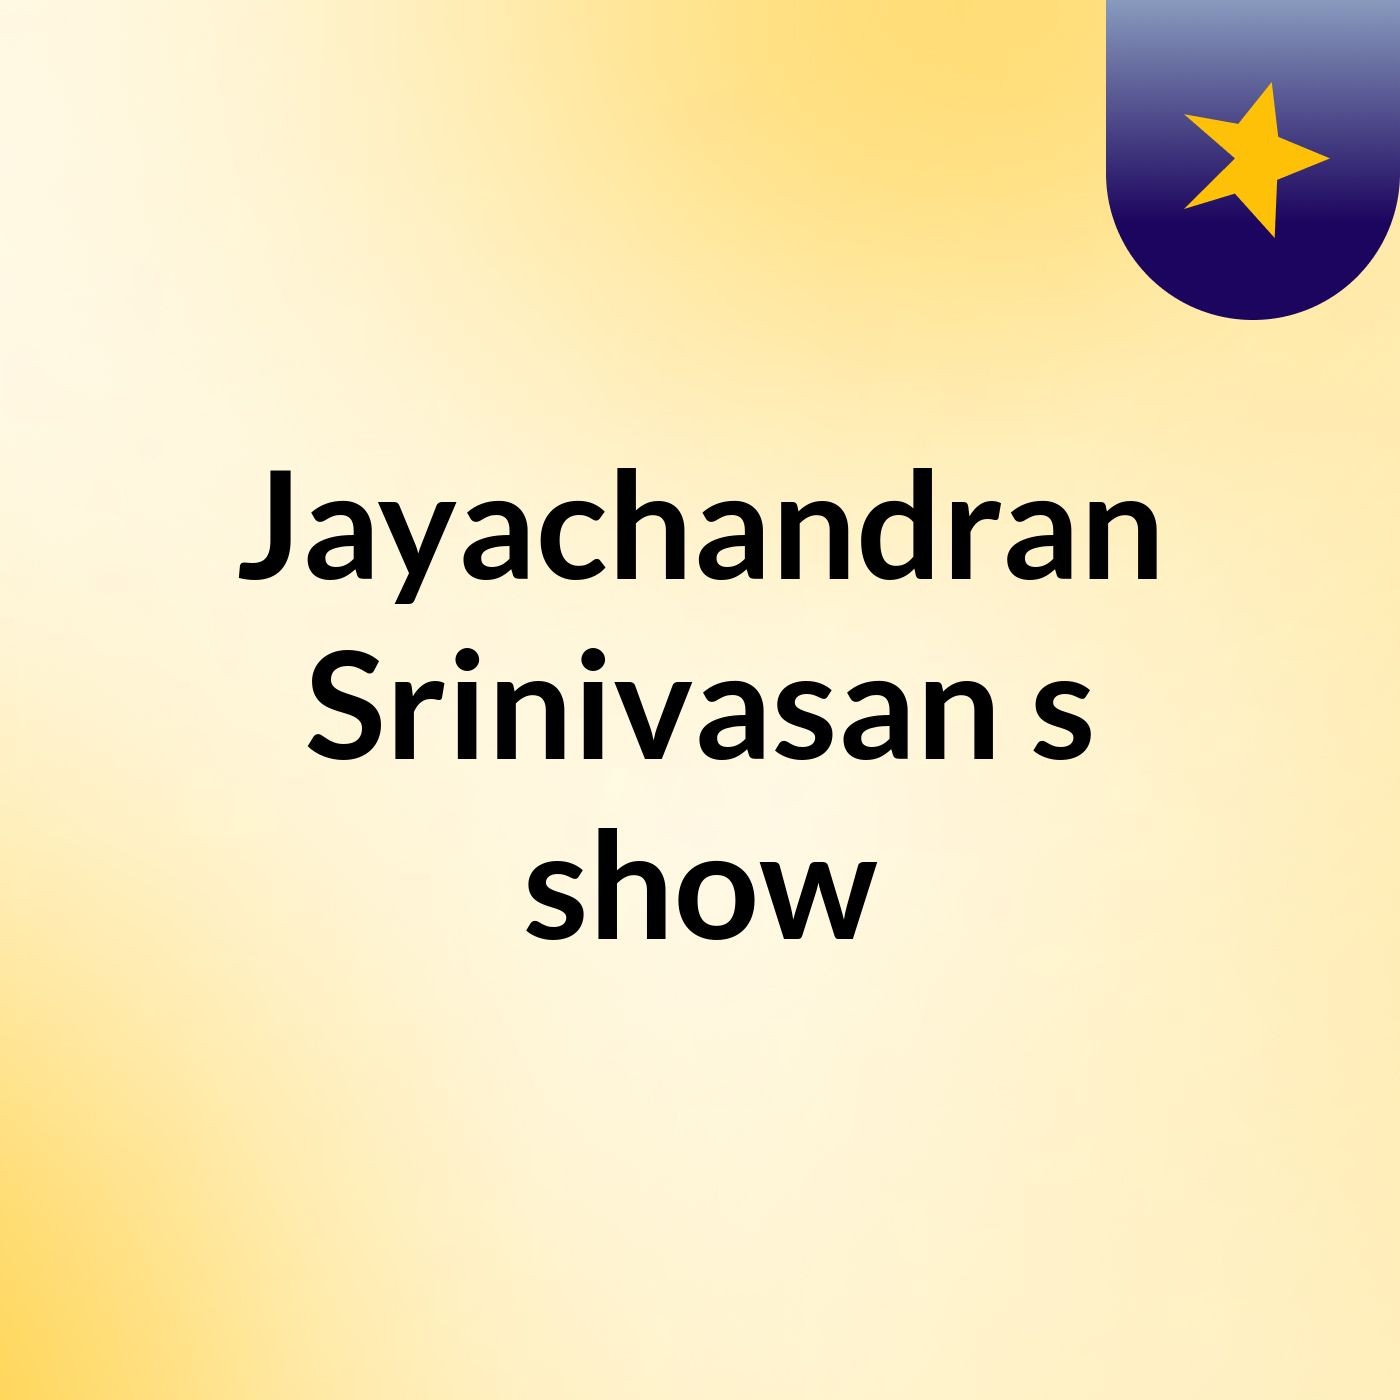 Episode 5 - Jayachandran Srinivasan's show